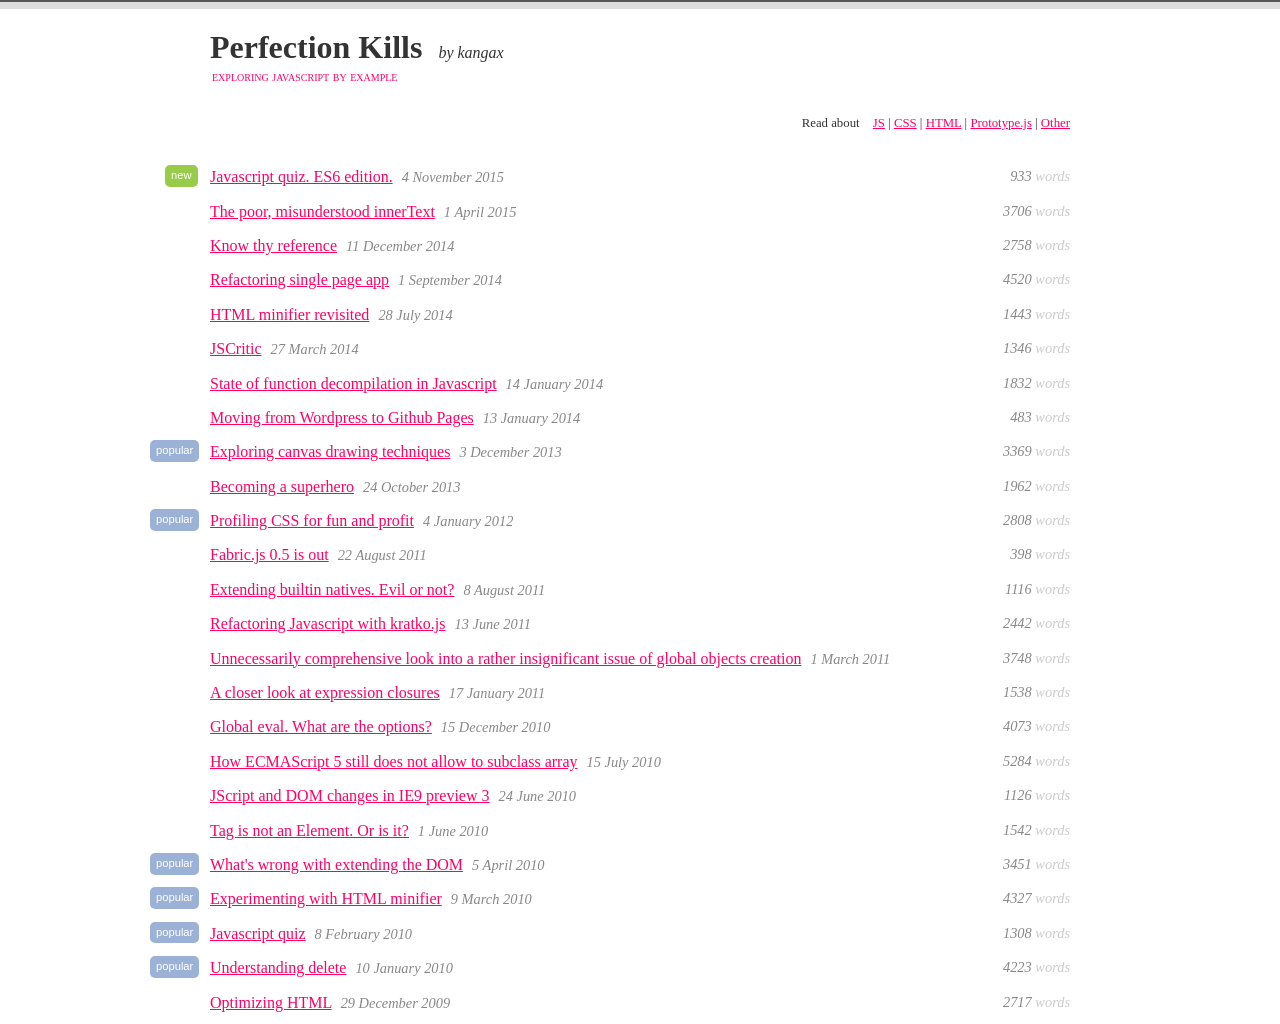 perfectionkills.com